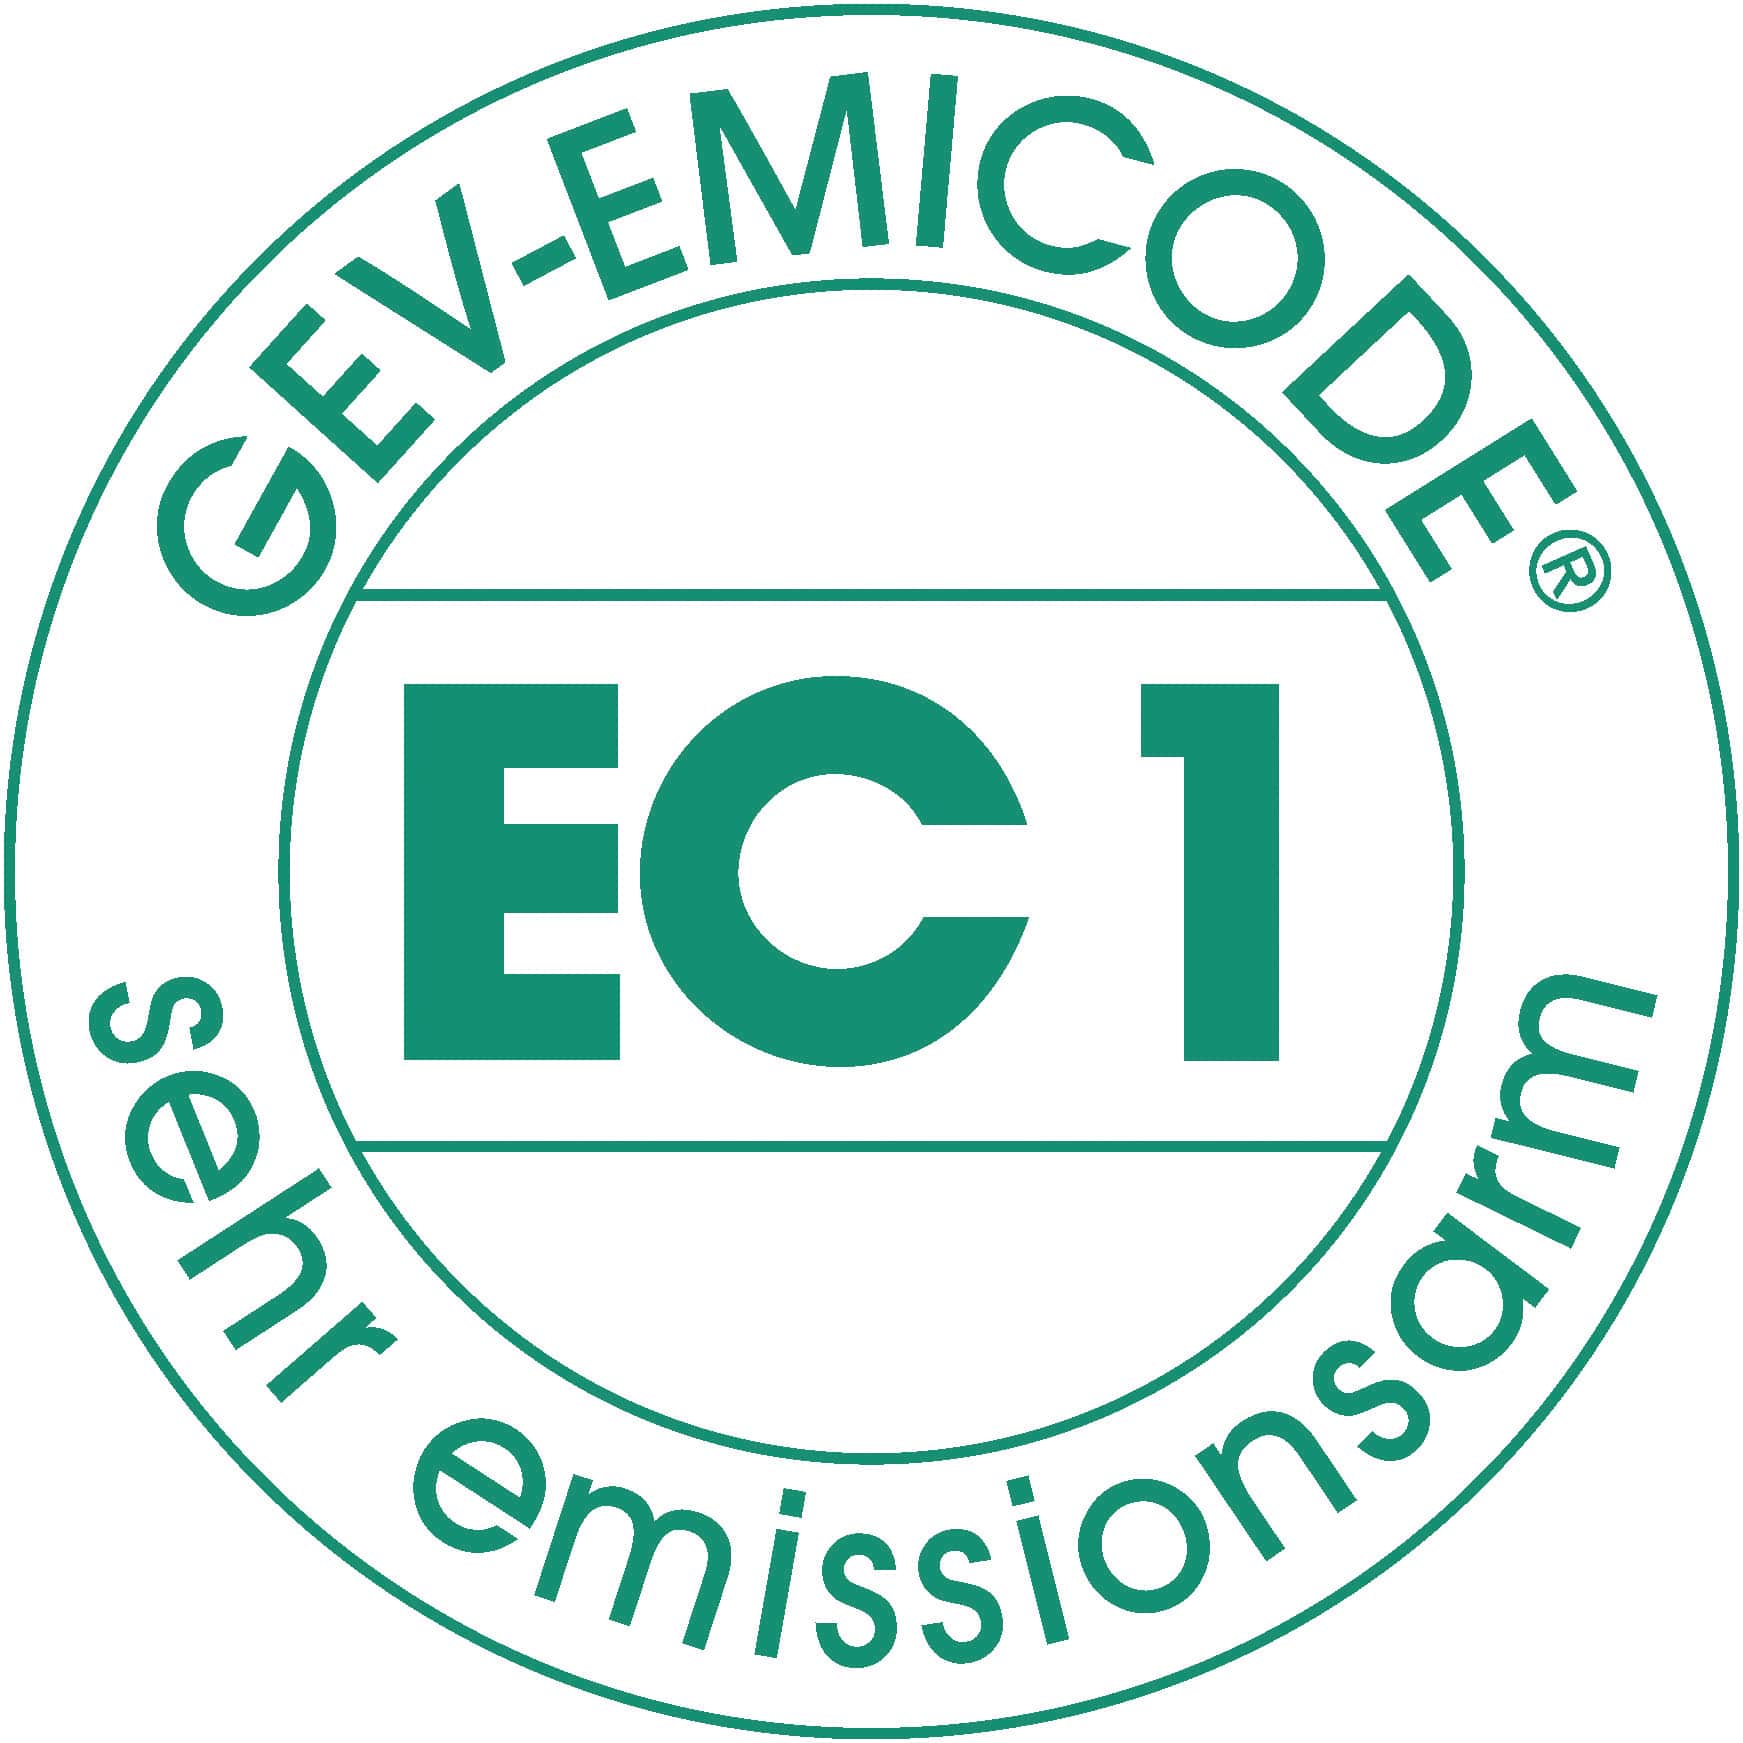 GEV-EMICODE EC1 sehr emissionsarm